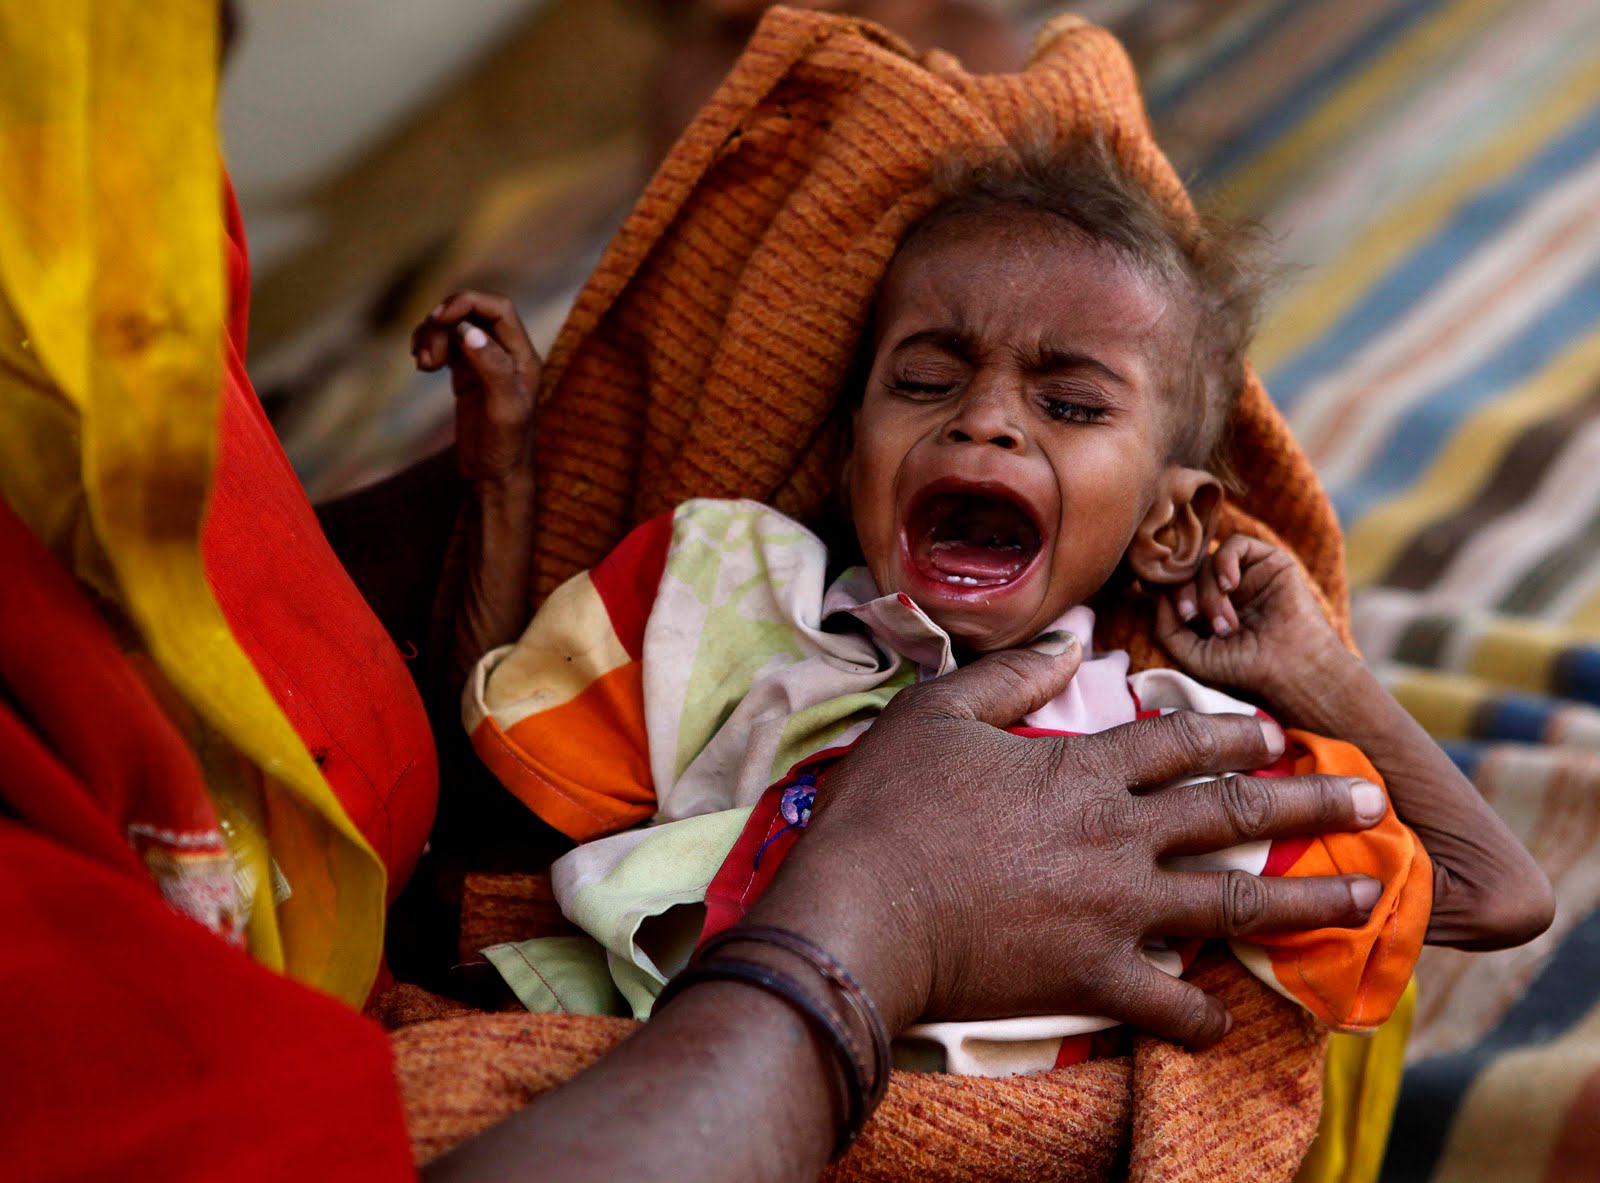 Maharashtra Steps Up Measures To Address Malnutrition Across State